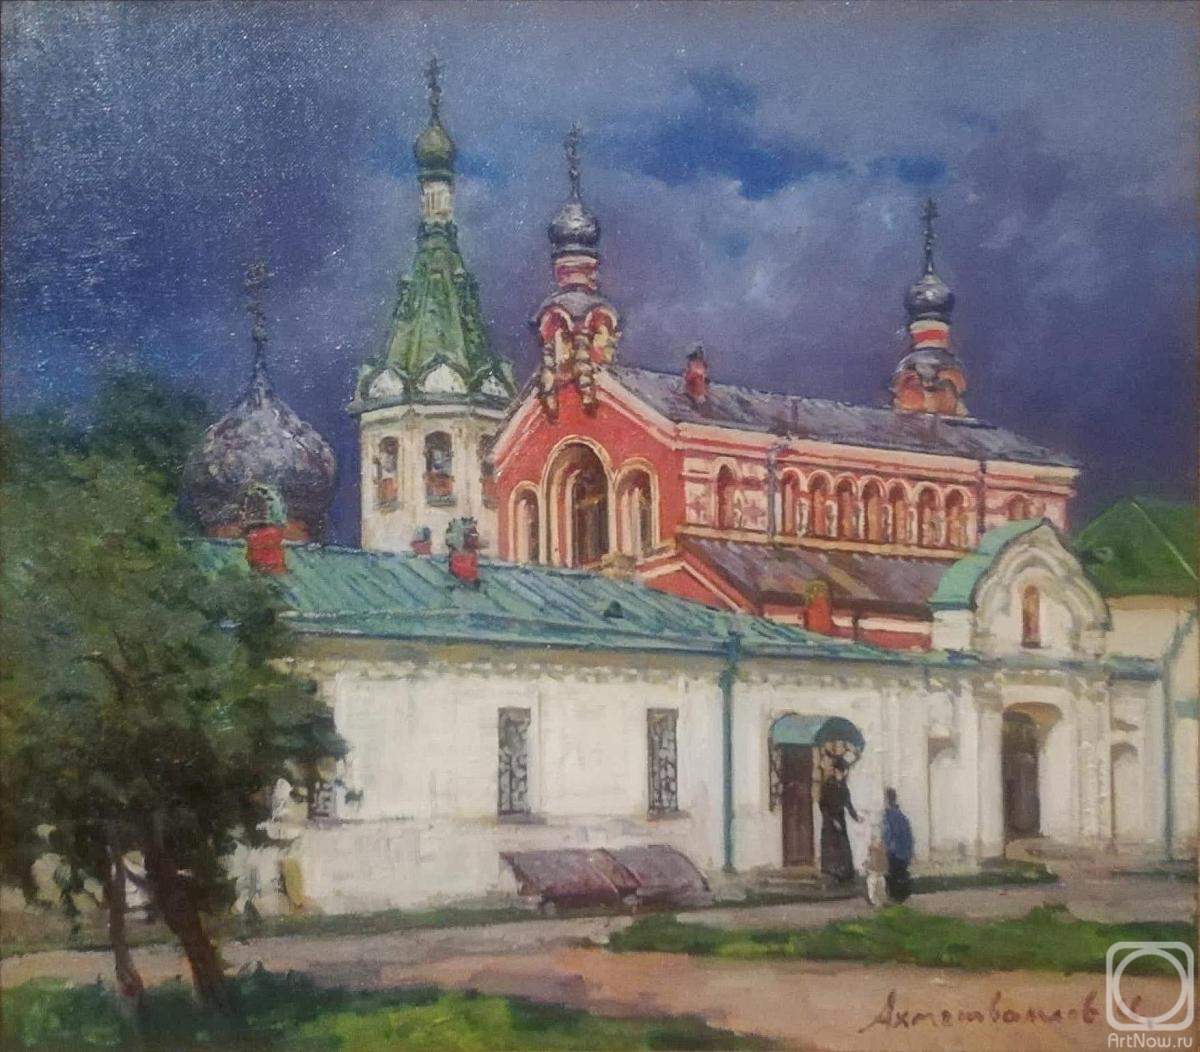 Ahmetvaliev Ildar. St. Nicholas Cathedral. Staraya Ladoga